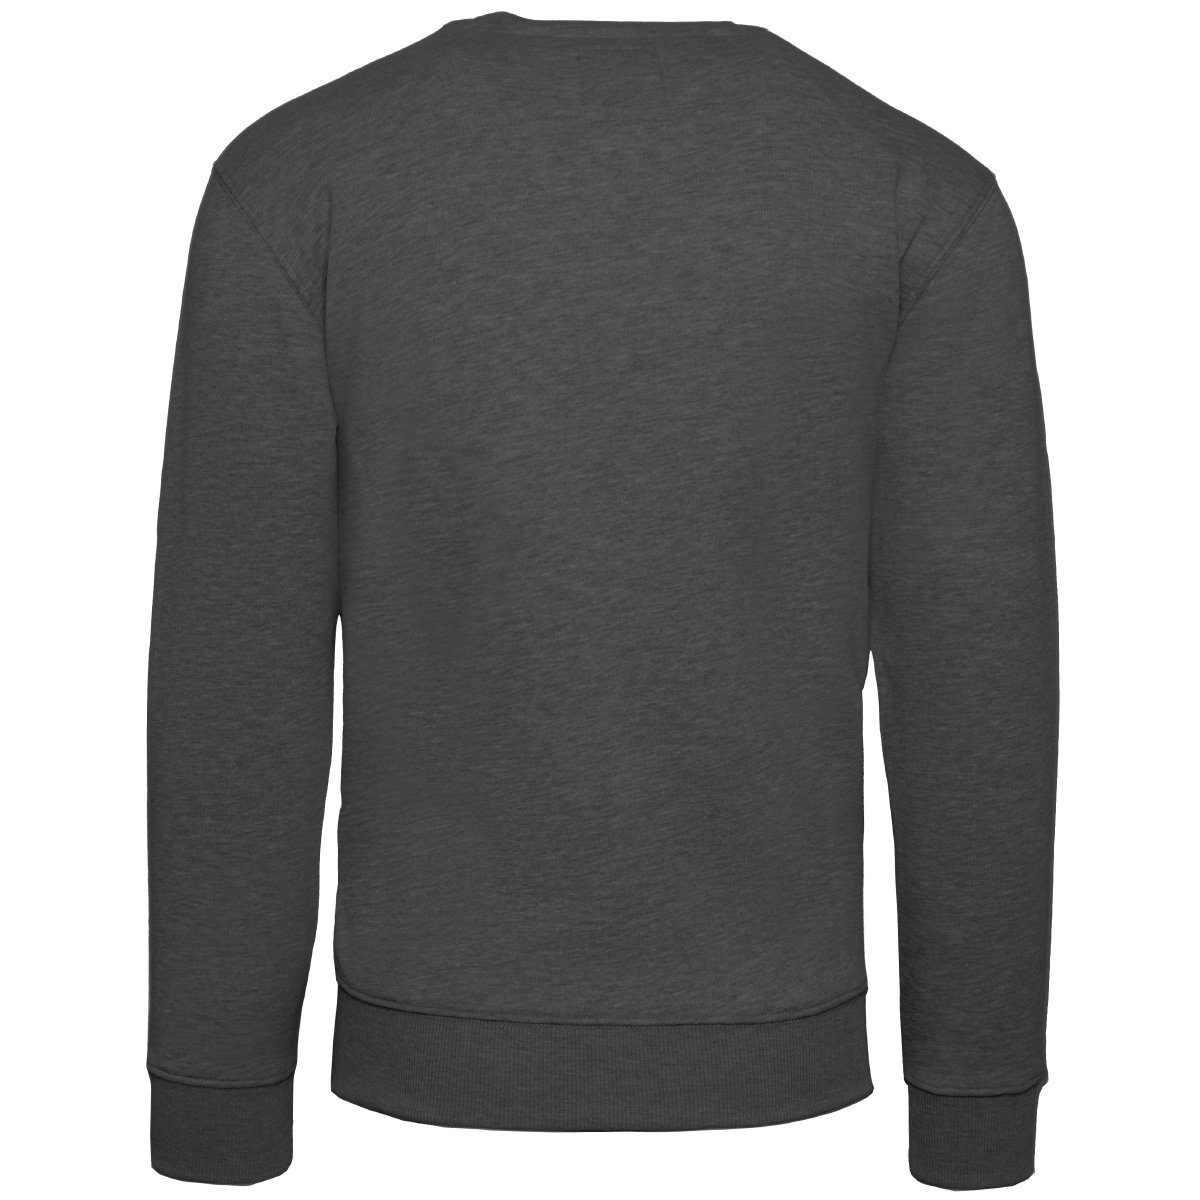 Sweatshirt Alpha grau Basic Industries Herren Sweater